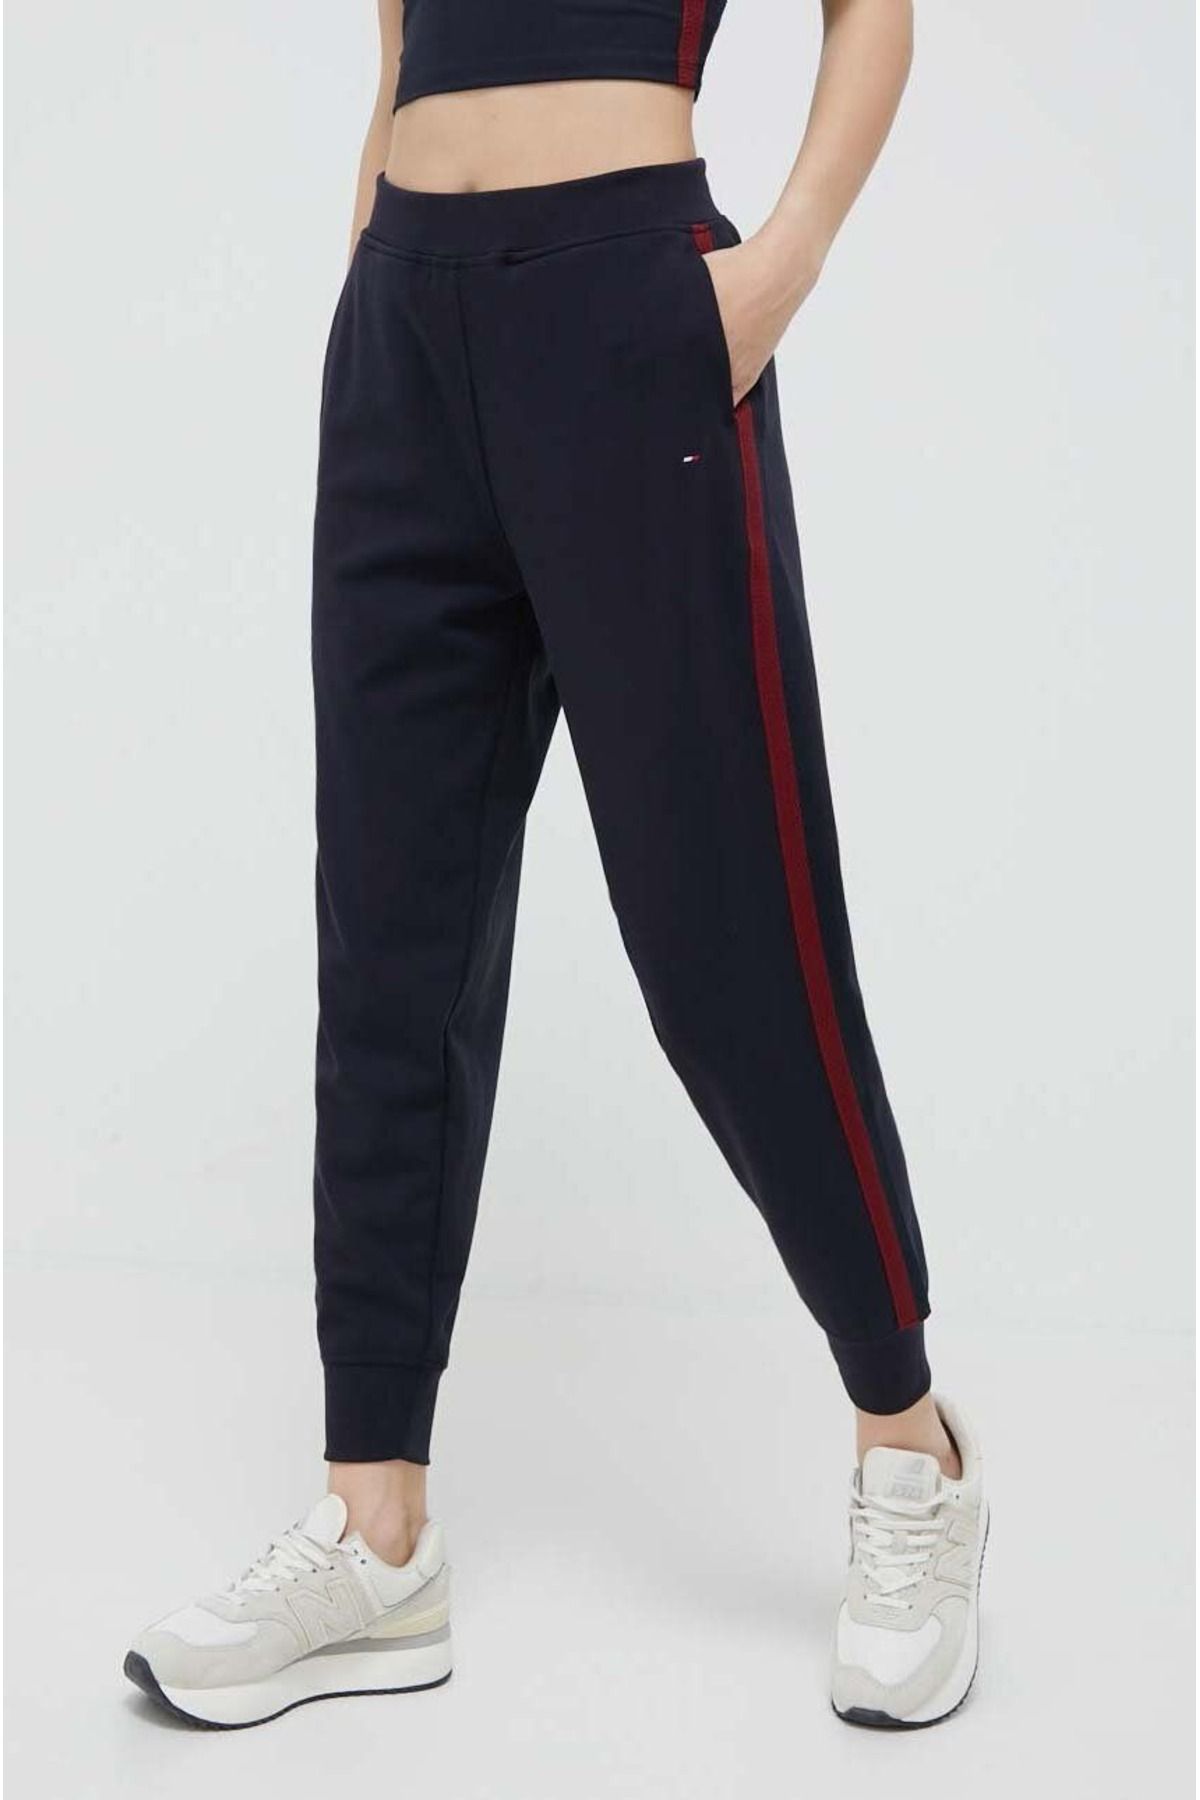 Tommy Hilfiger Interlock Tape jogging pants S10S101716 Navy blue Regular Fit